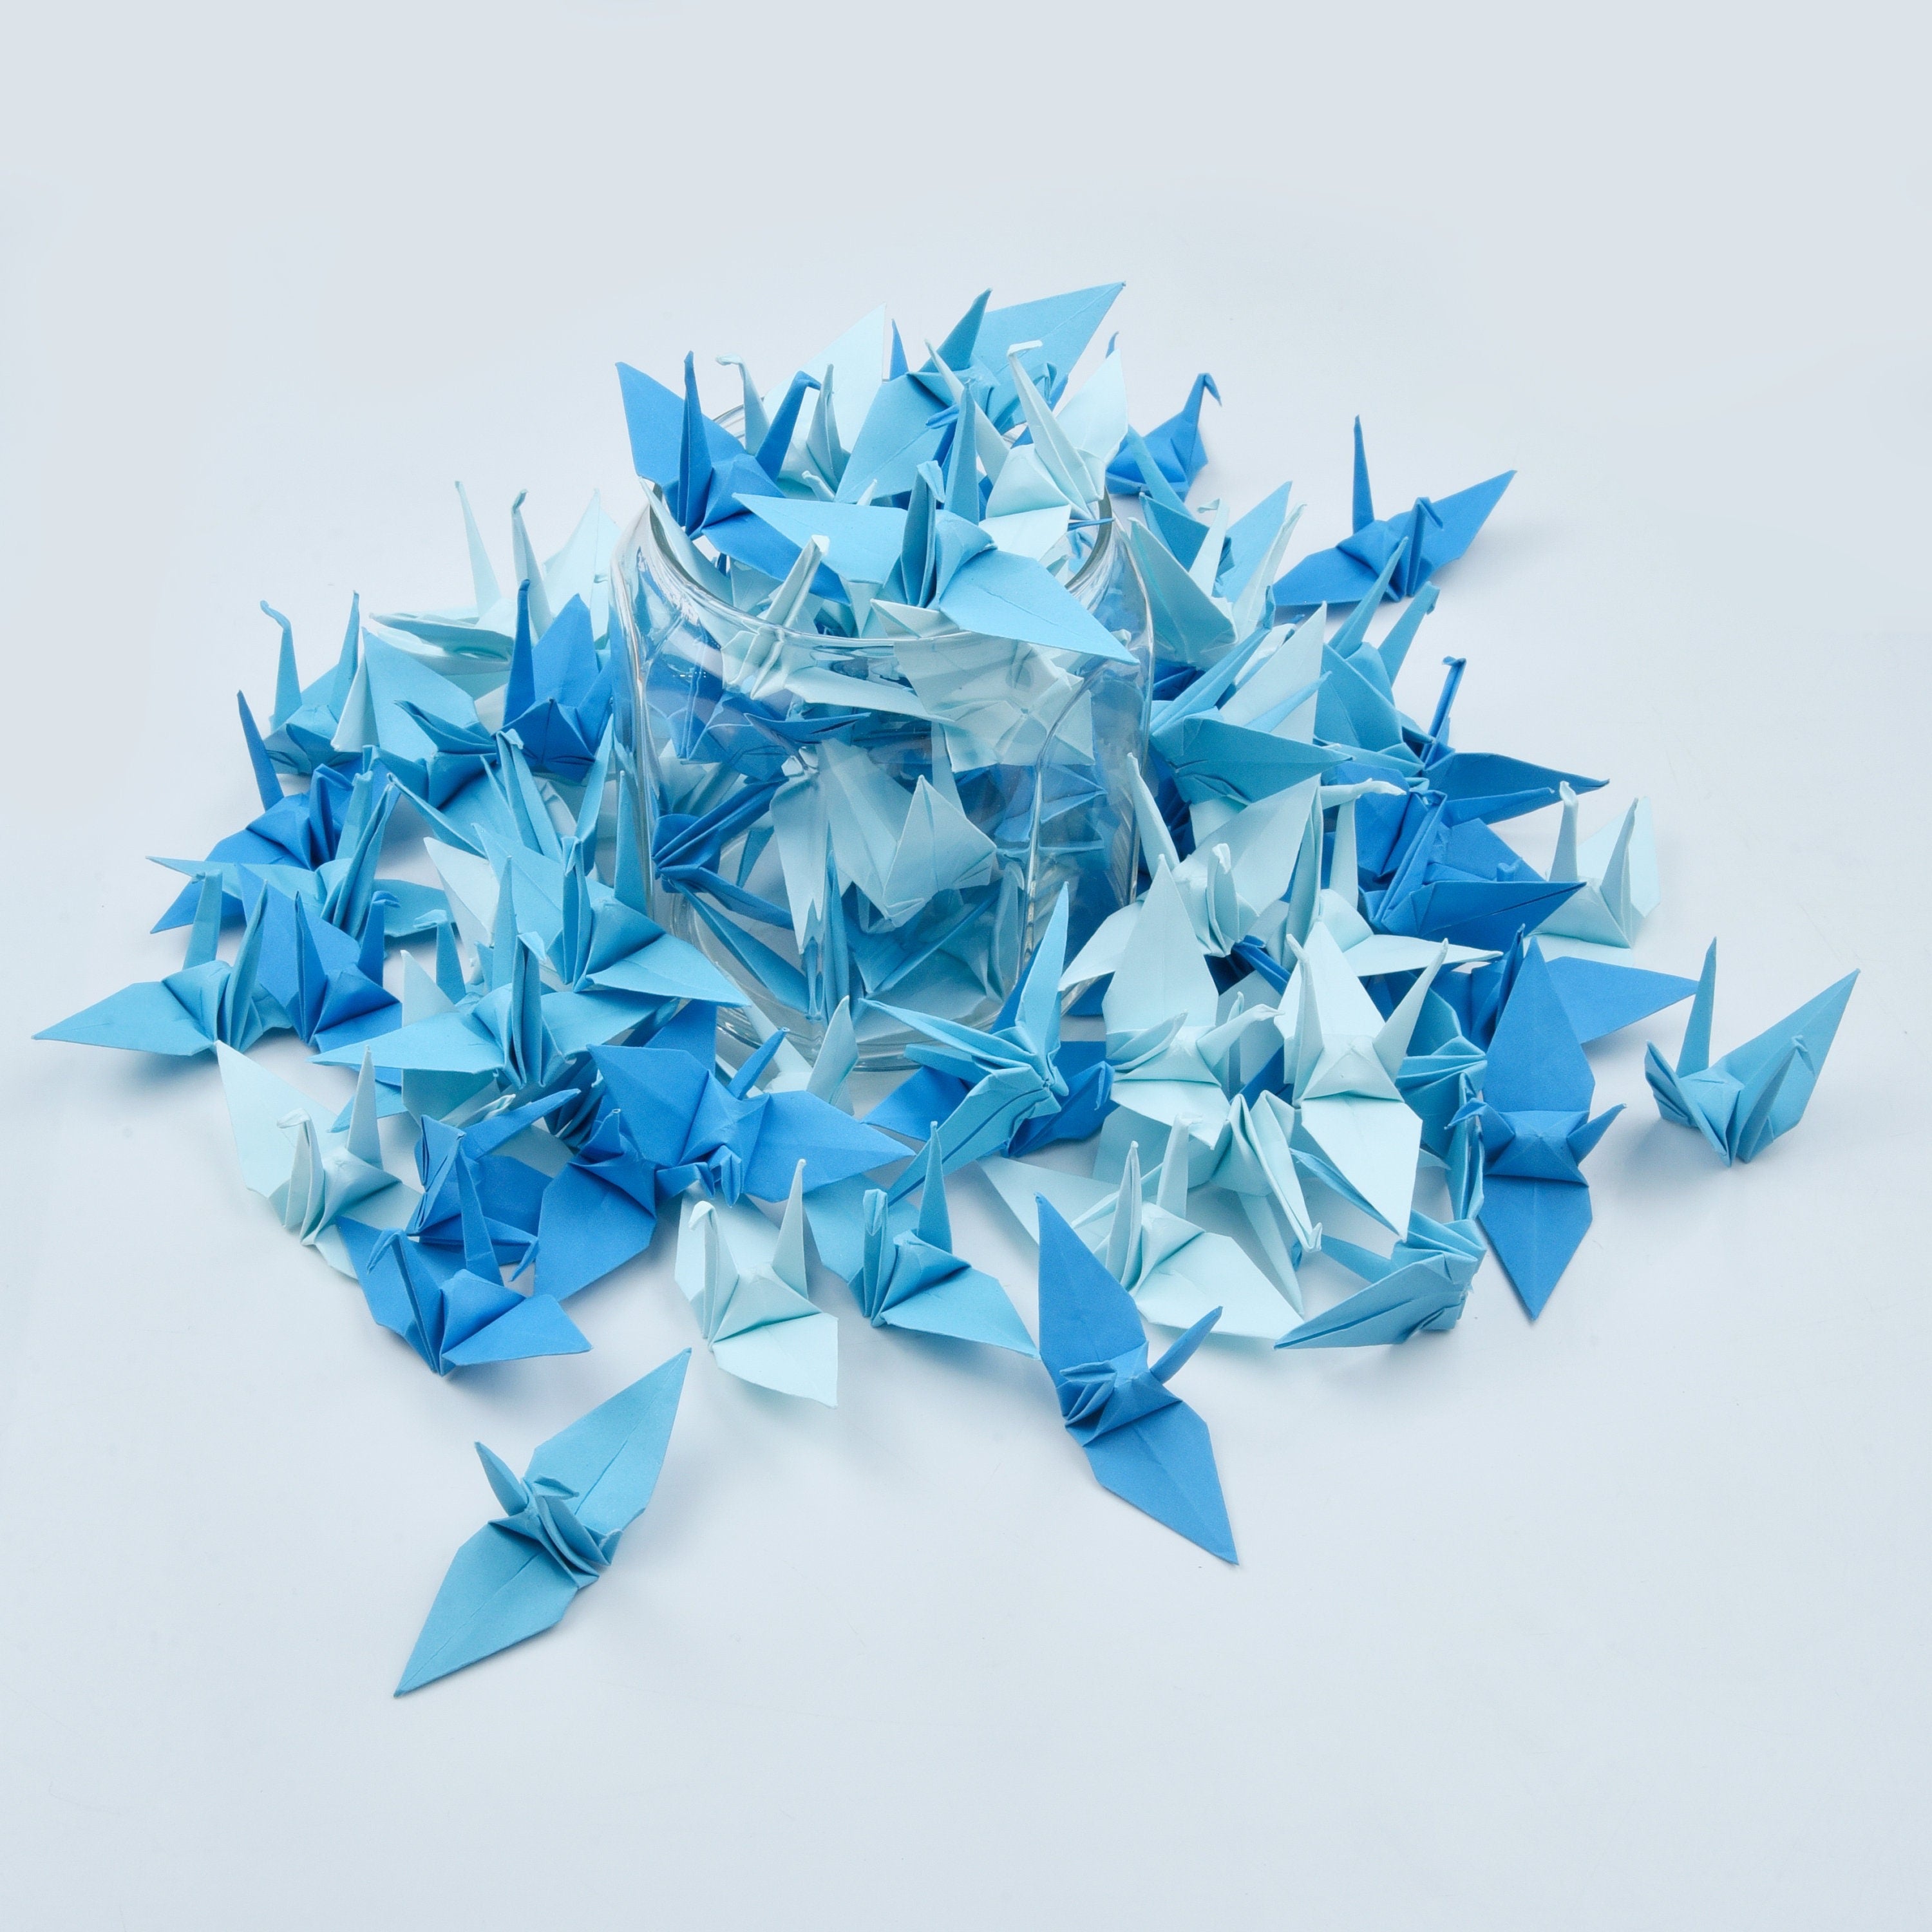 100 gru di carta origami in tonalità blu - 3x3 pollici 7,5 cm - per decorazioni di nozze, regali di anniversario, San Valentino, fondali